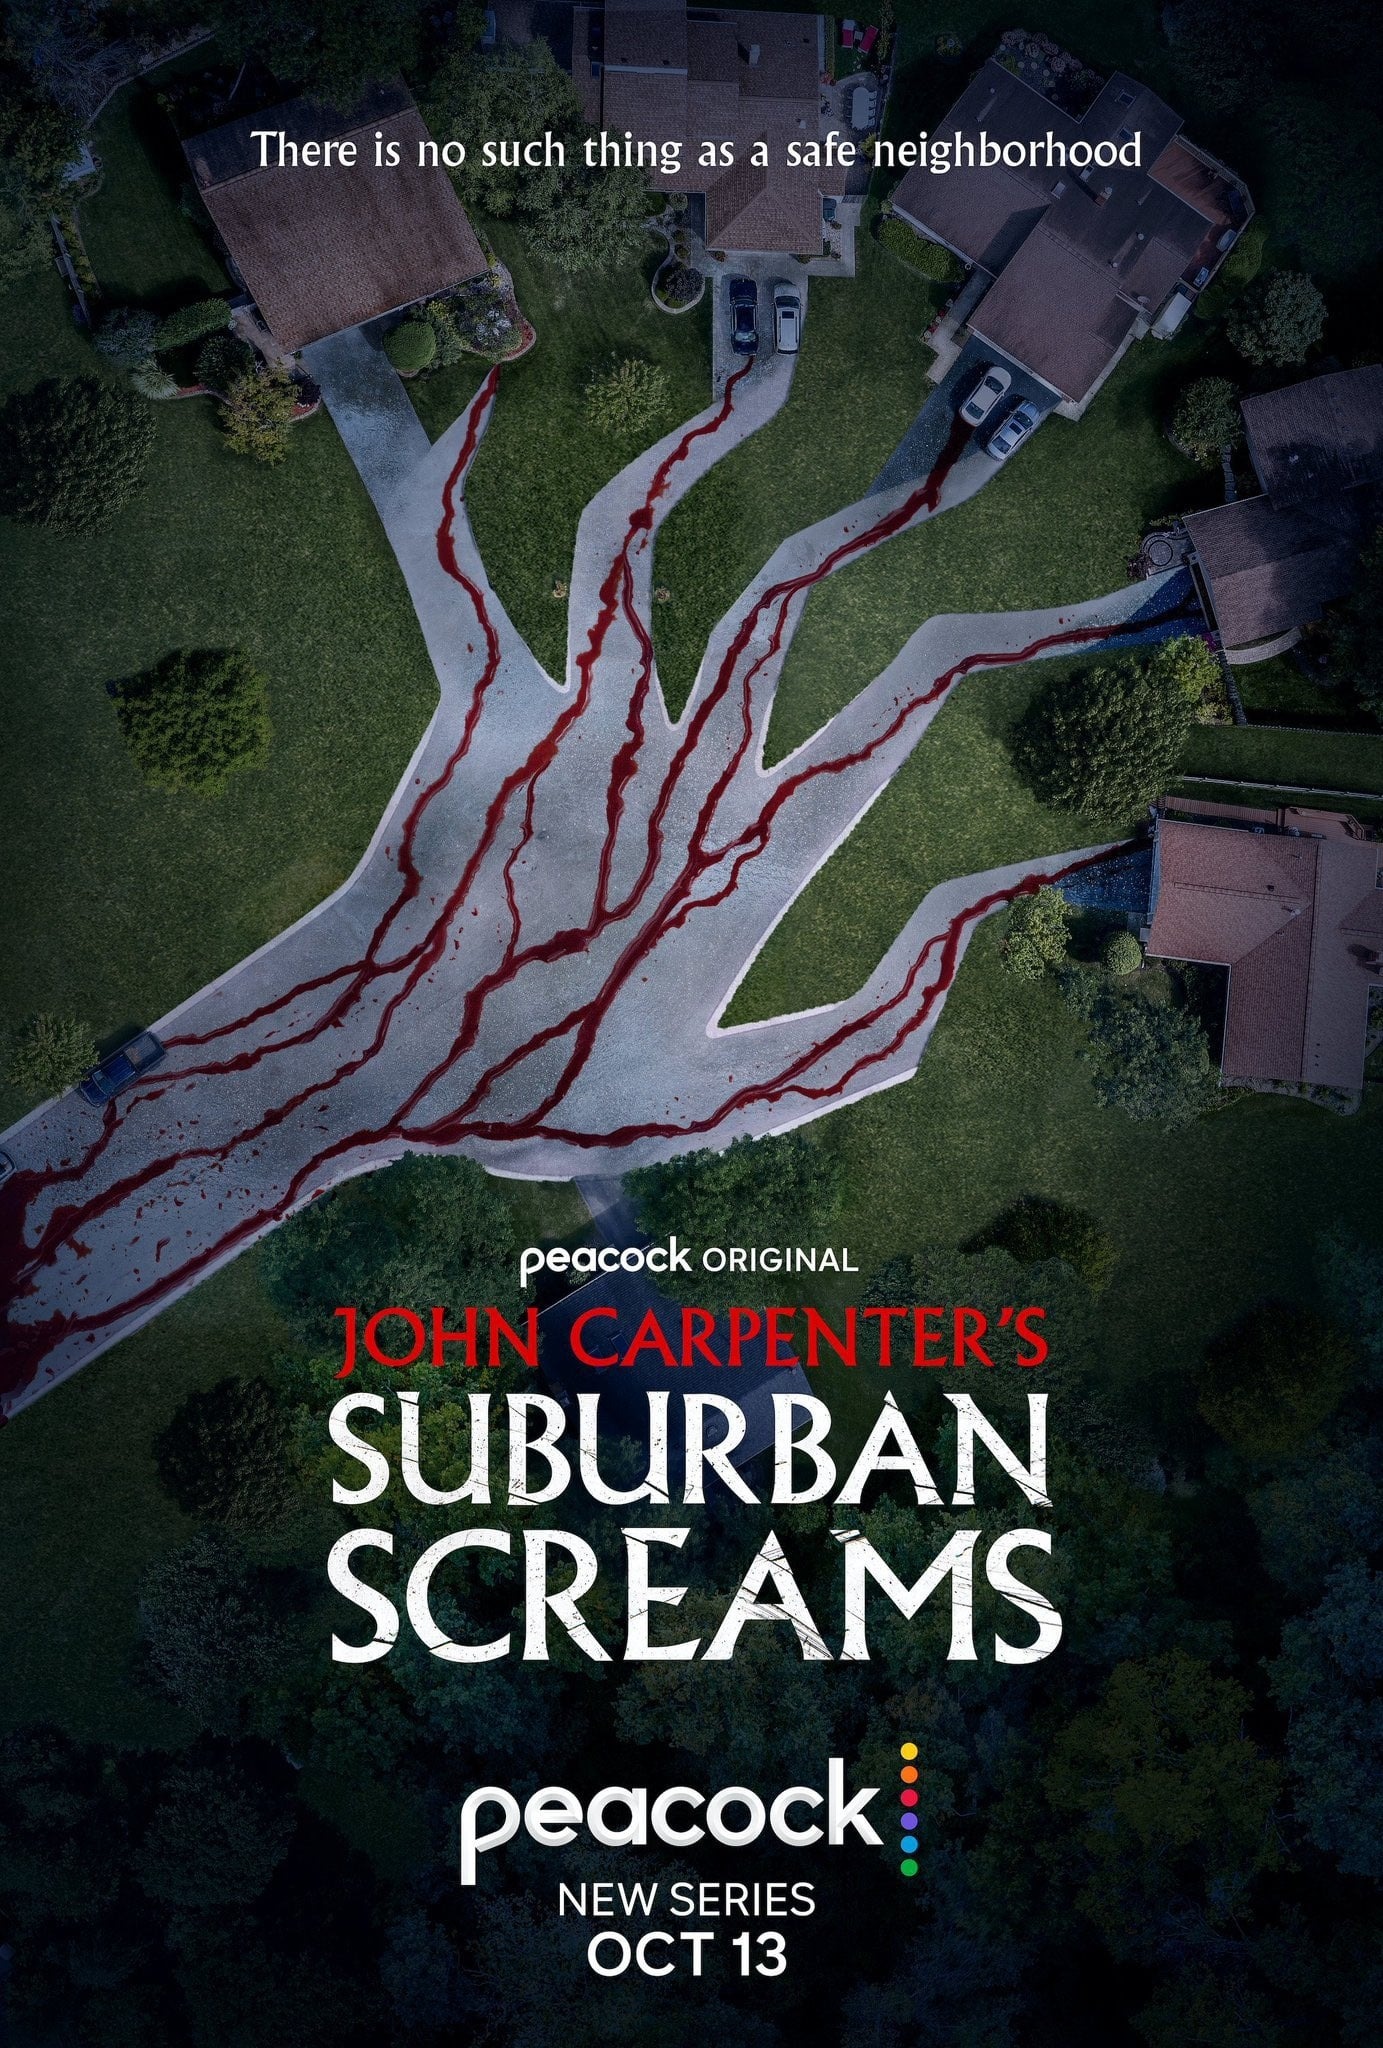 Mega Sized TV Poster Image for John Carpenter's Suburban Screams 